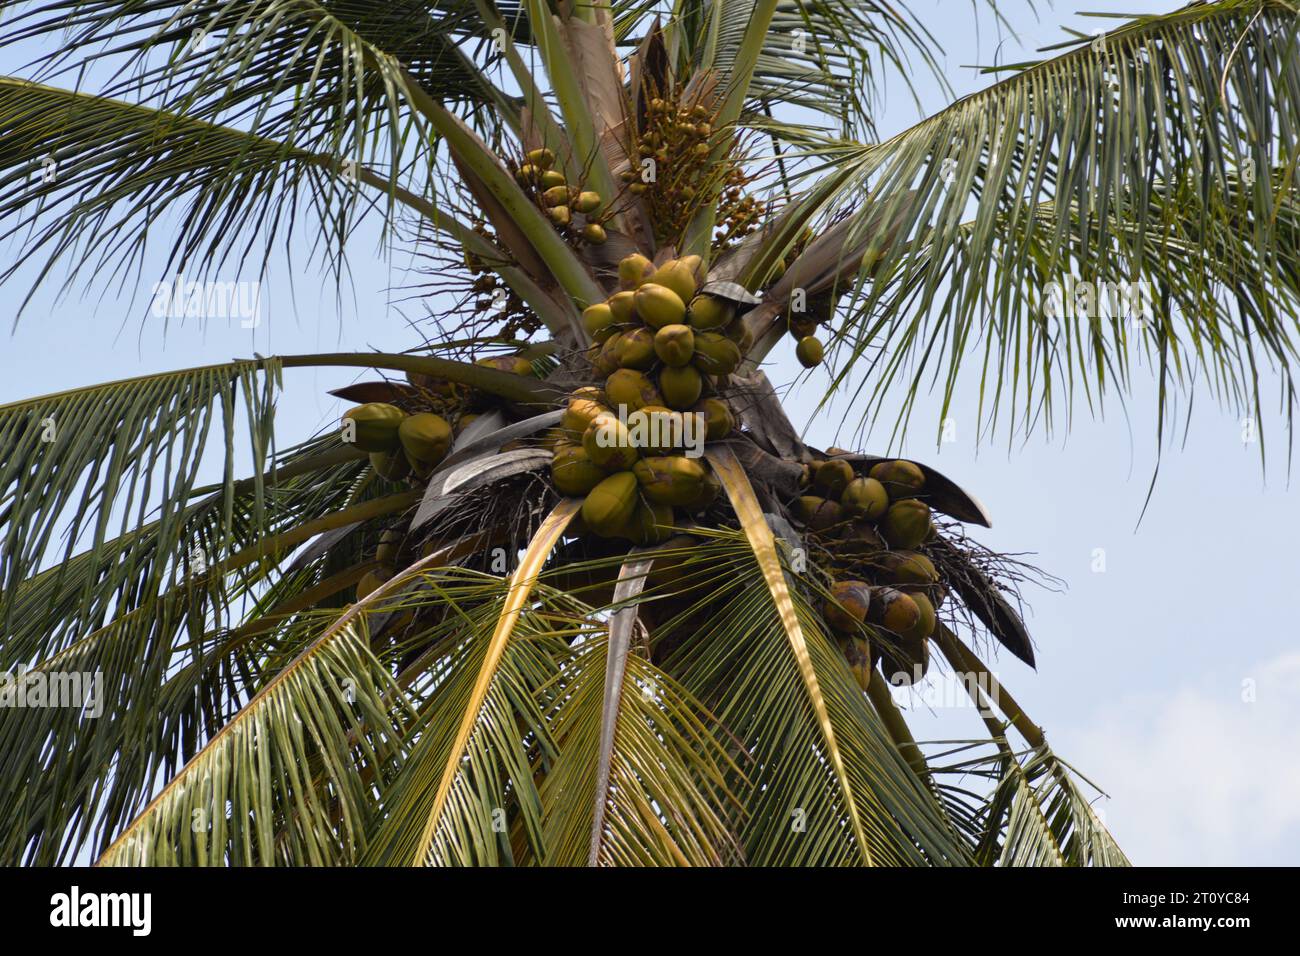 the coconut tree is very Hight. wind seasons Stock Photo